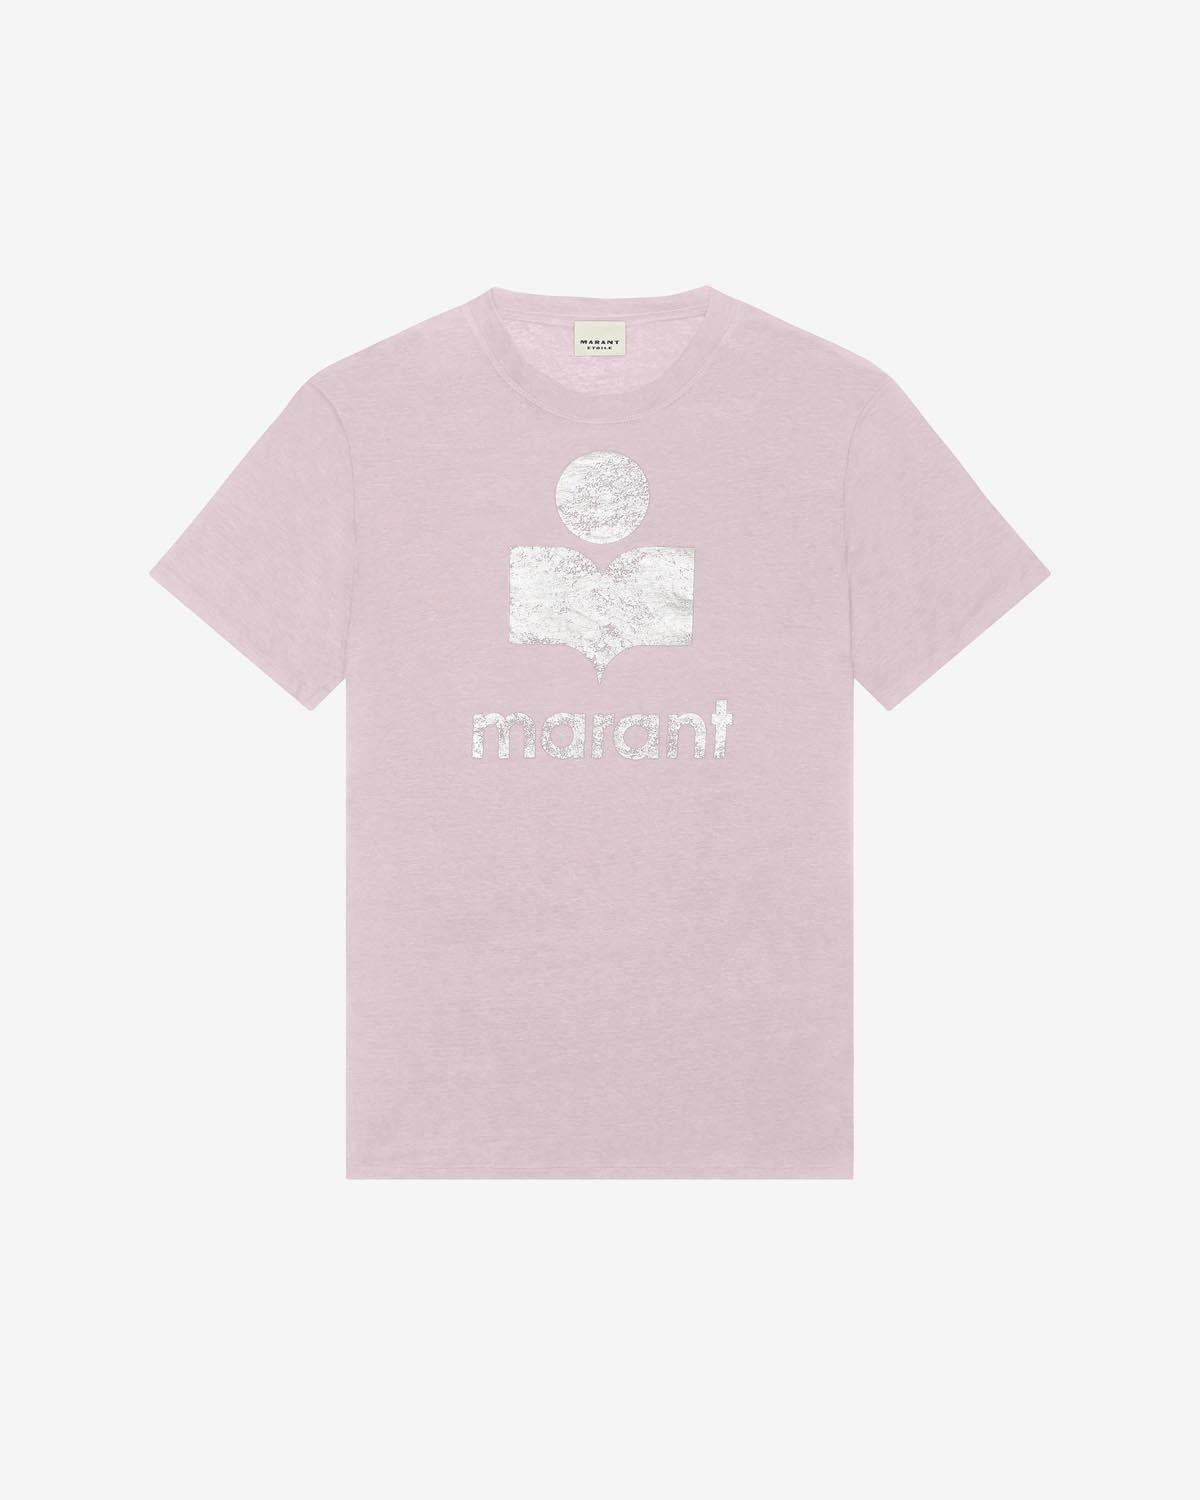 Zewel t-shirt Woman Pearl rose-silver 7